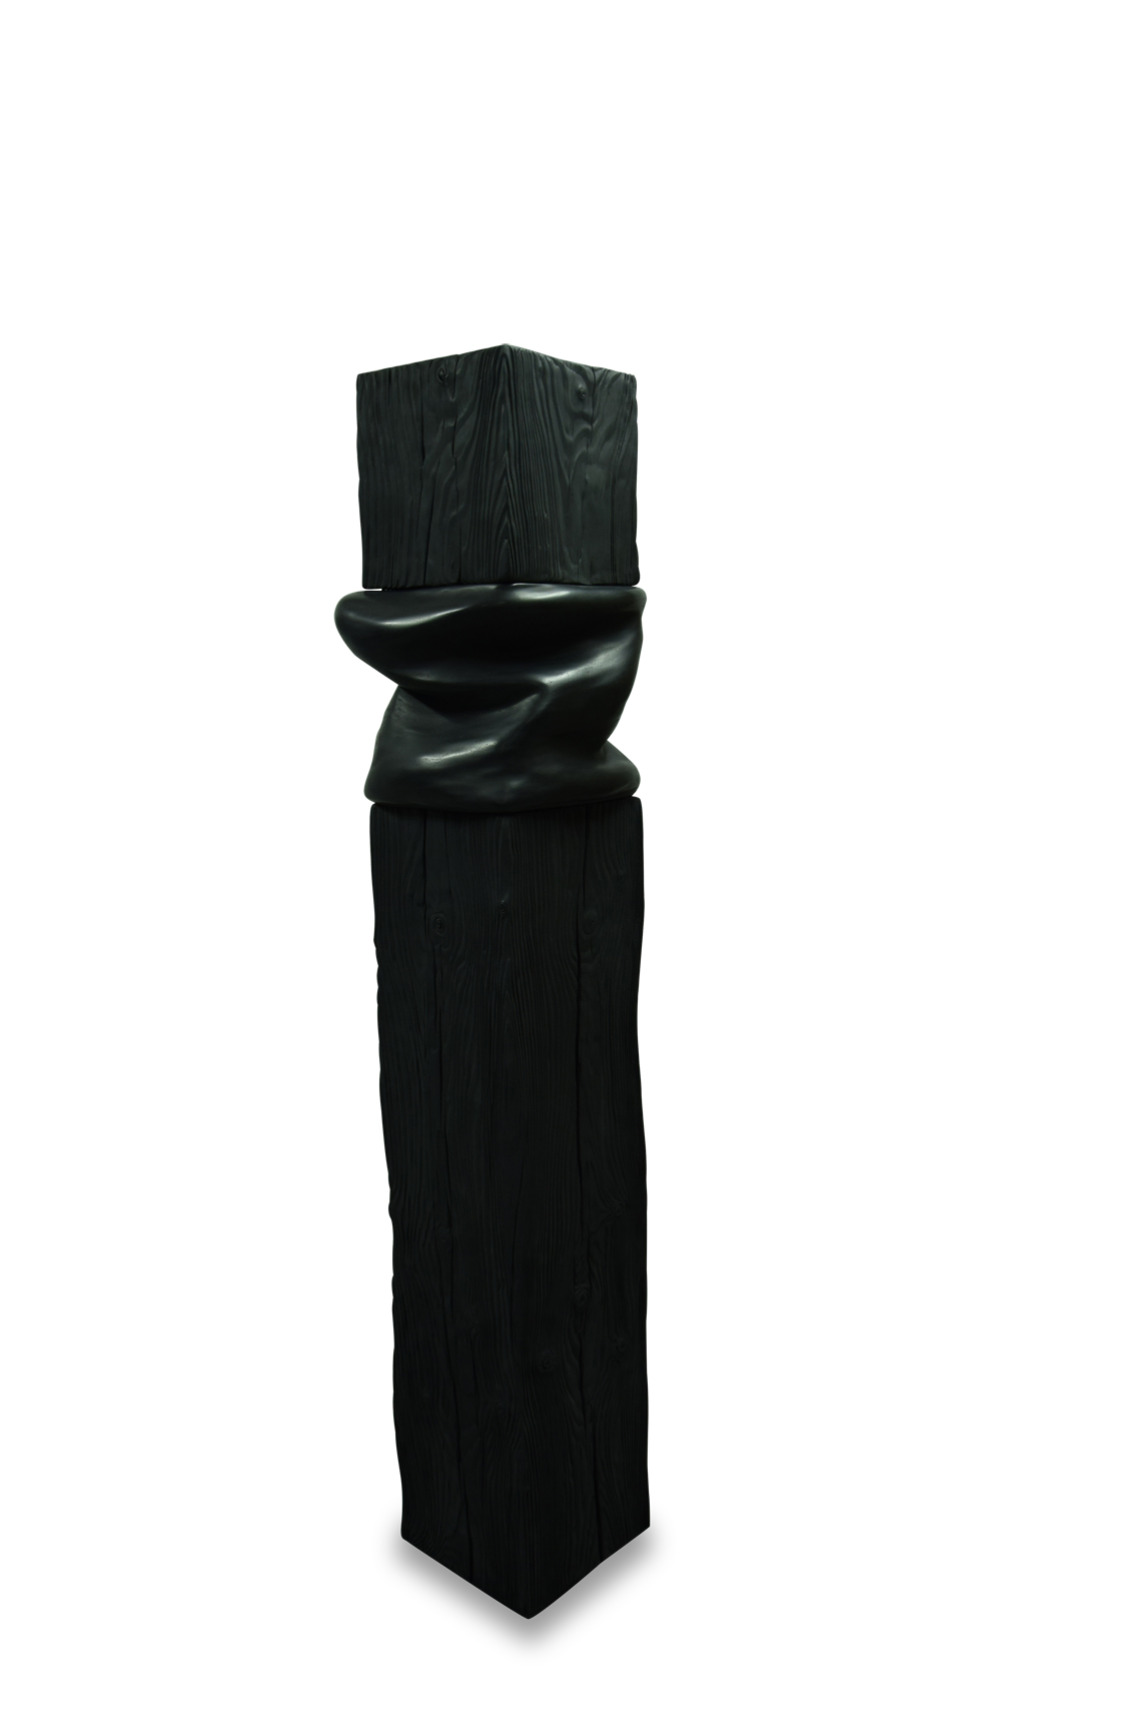 sculpture noir black monochrome wood art artiste 